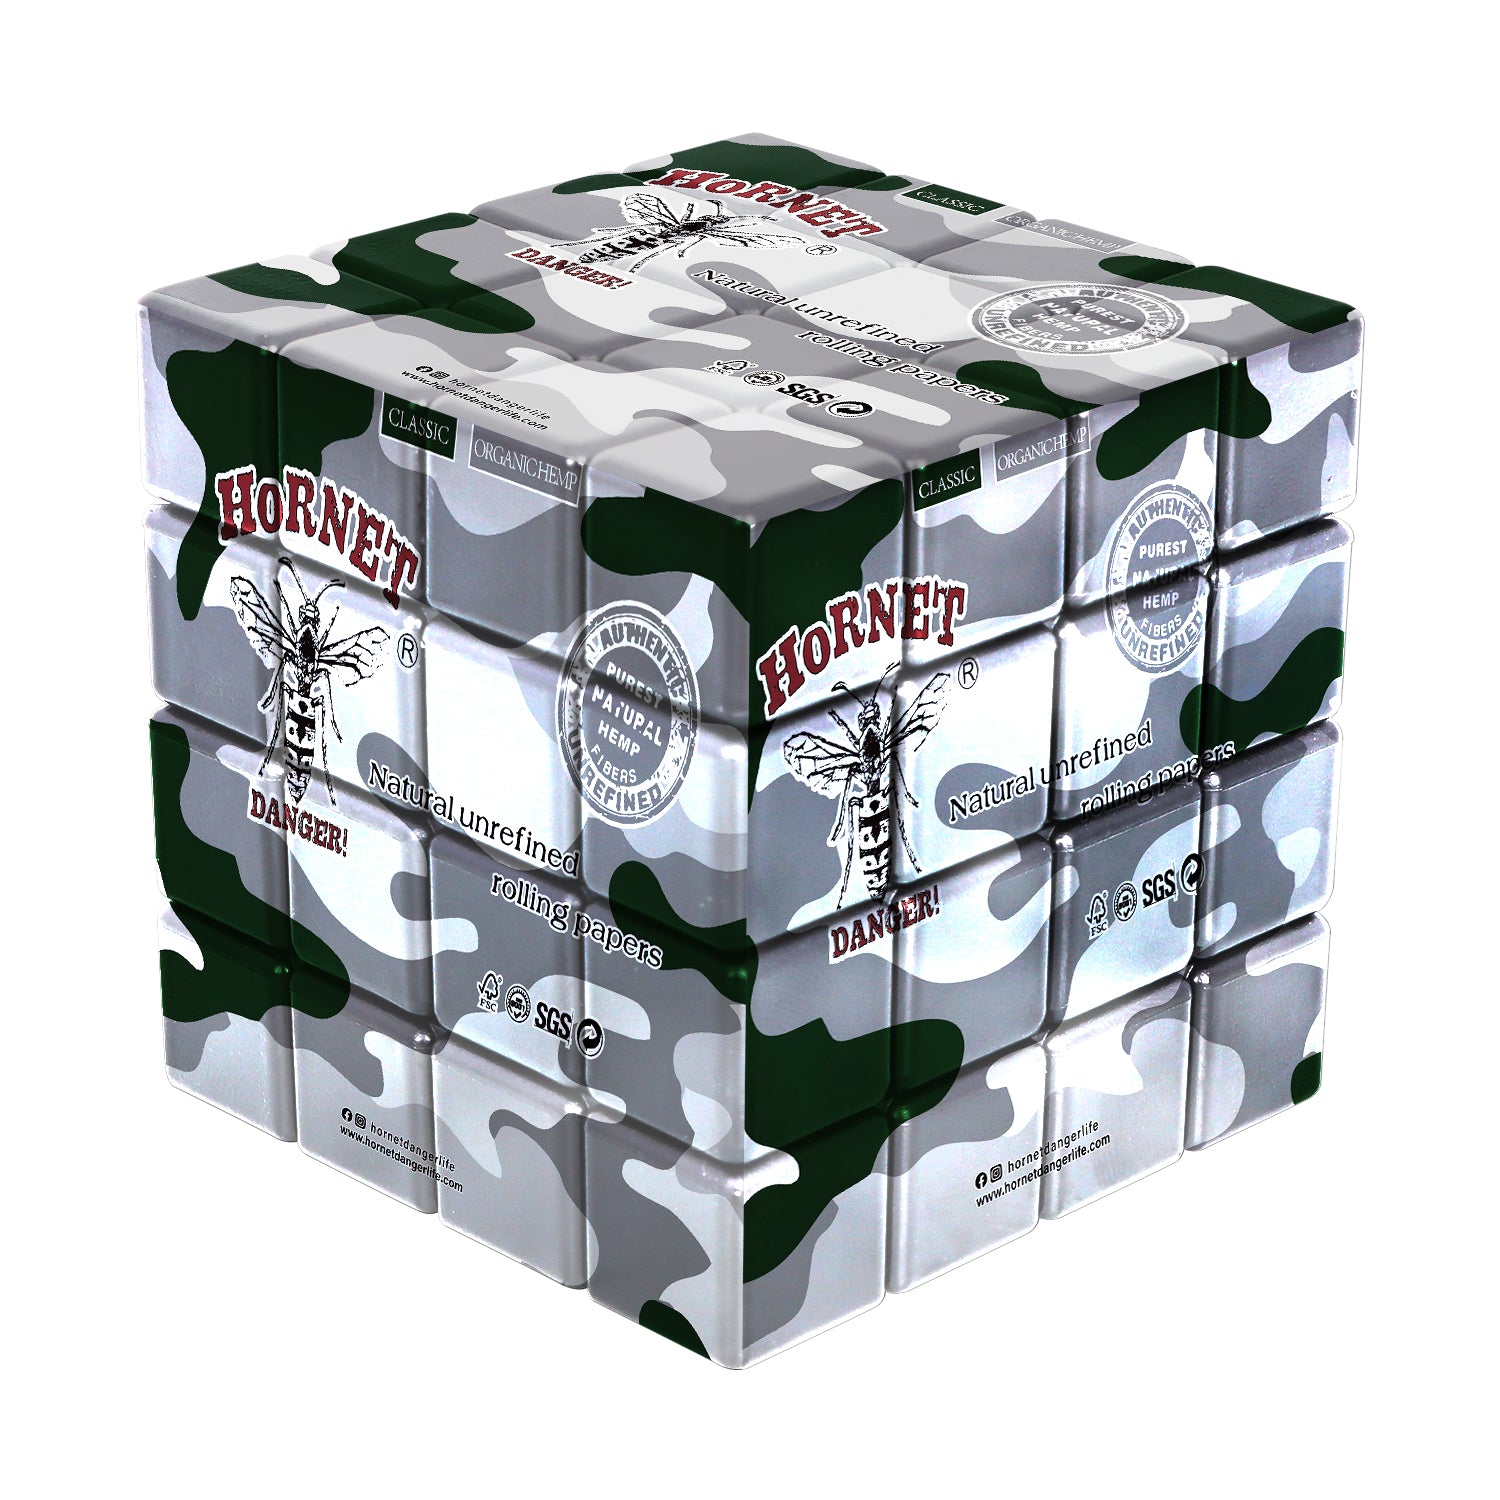 HORNET 60 mm Cube Shape Plastic Herb Grinder, 4 Lay Herbal Grinder